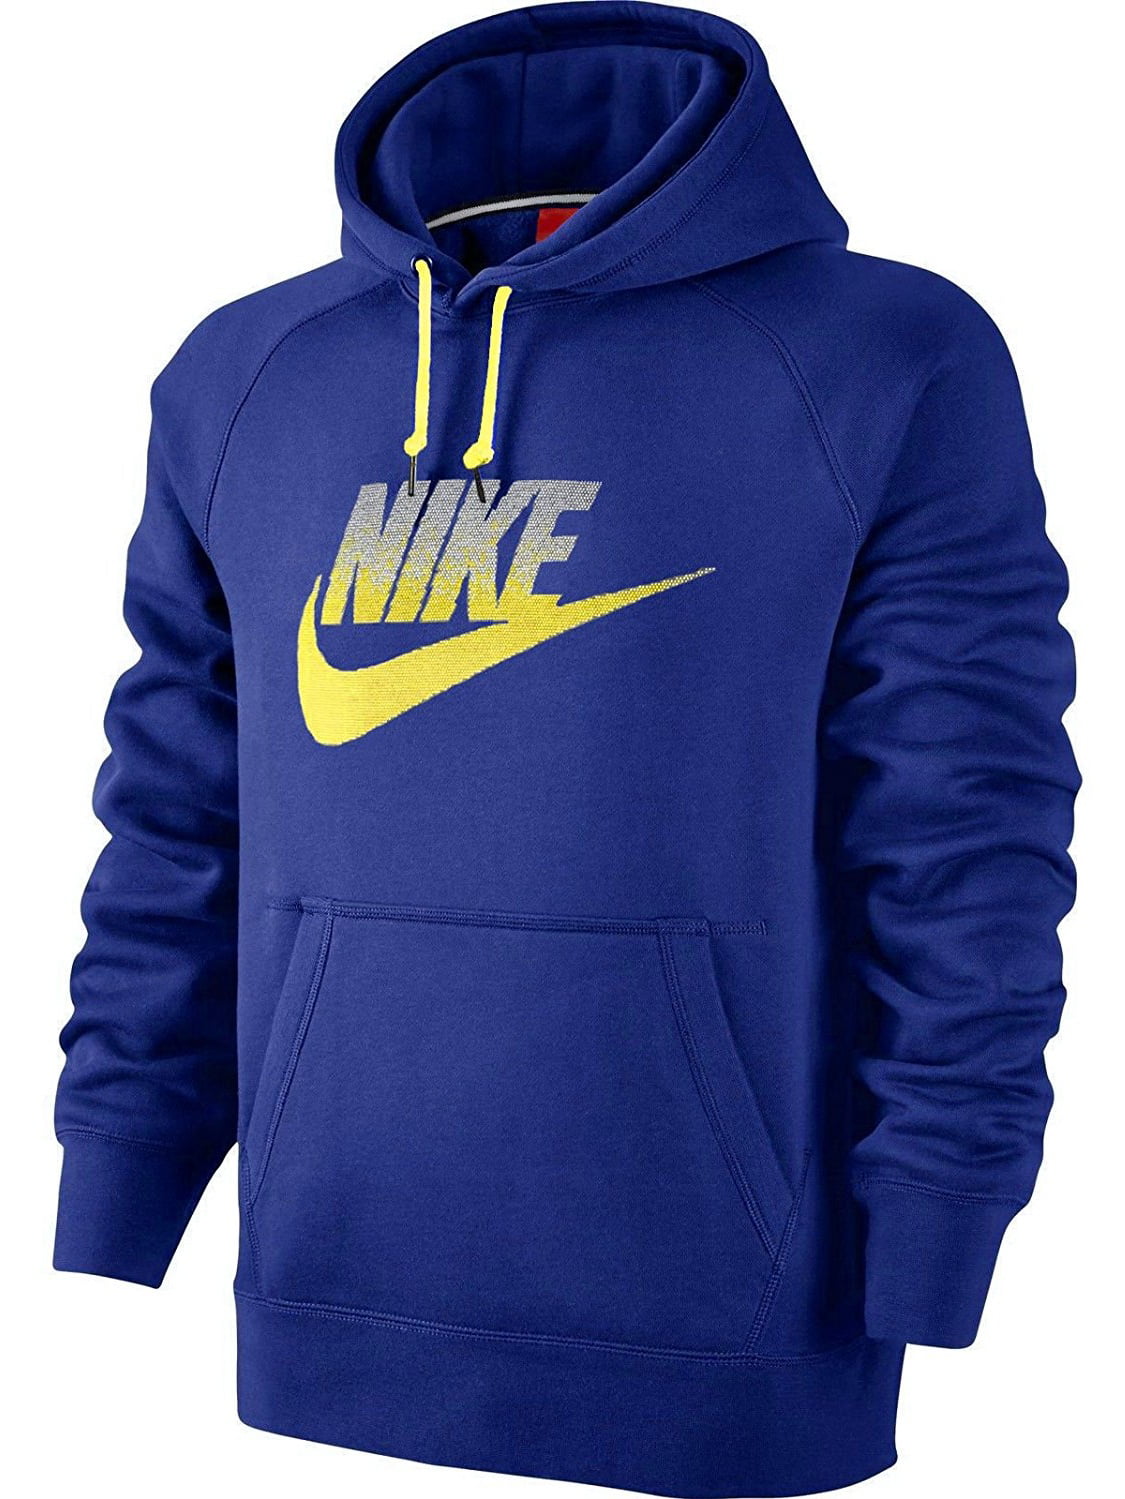 Nike Men's AW77 Futura Pullover Hoodie-Deep Royal Blue - Walmart.com